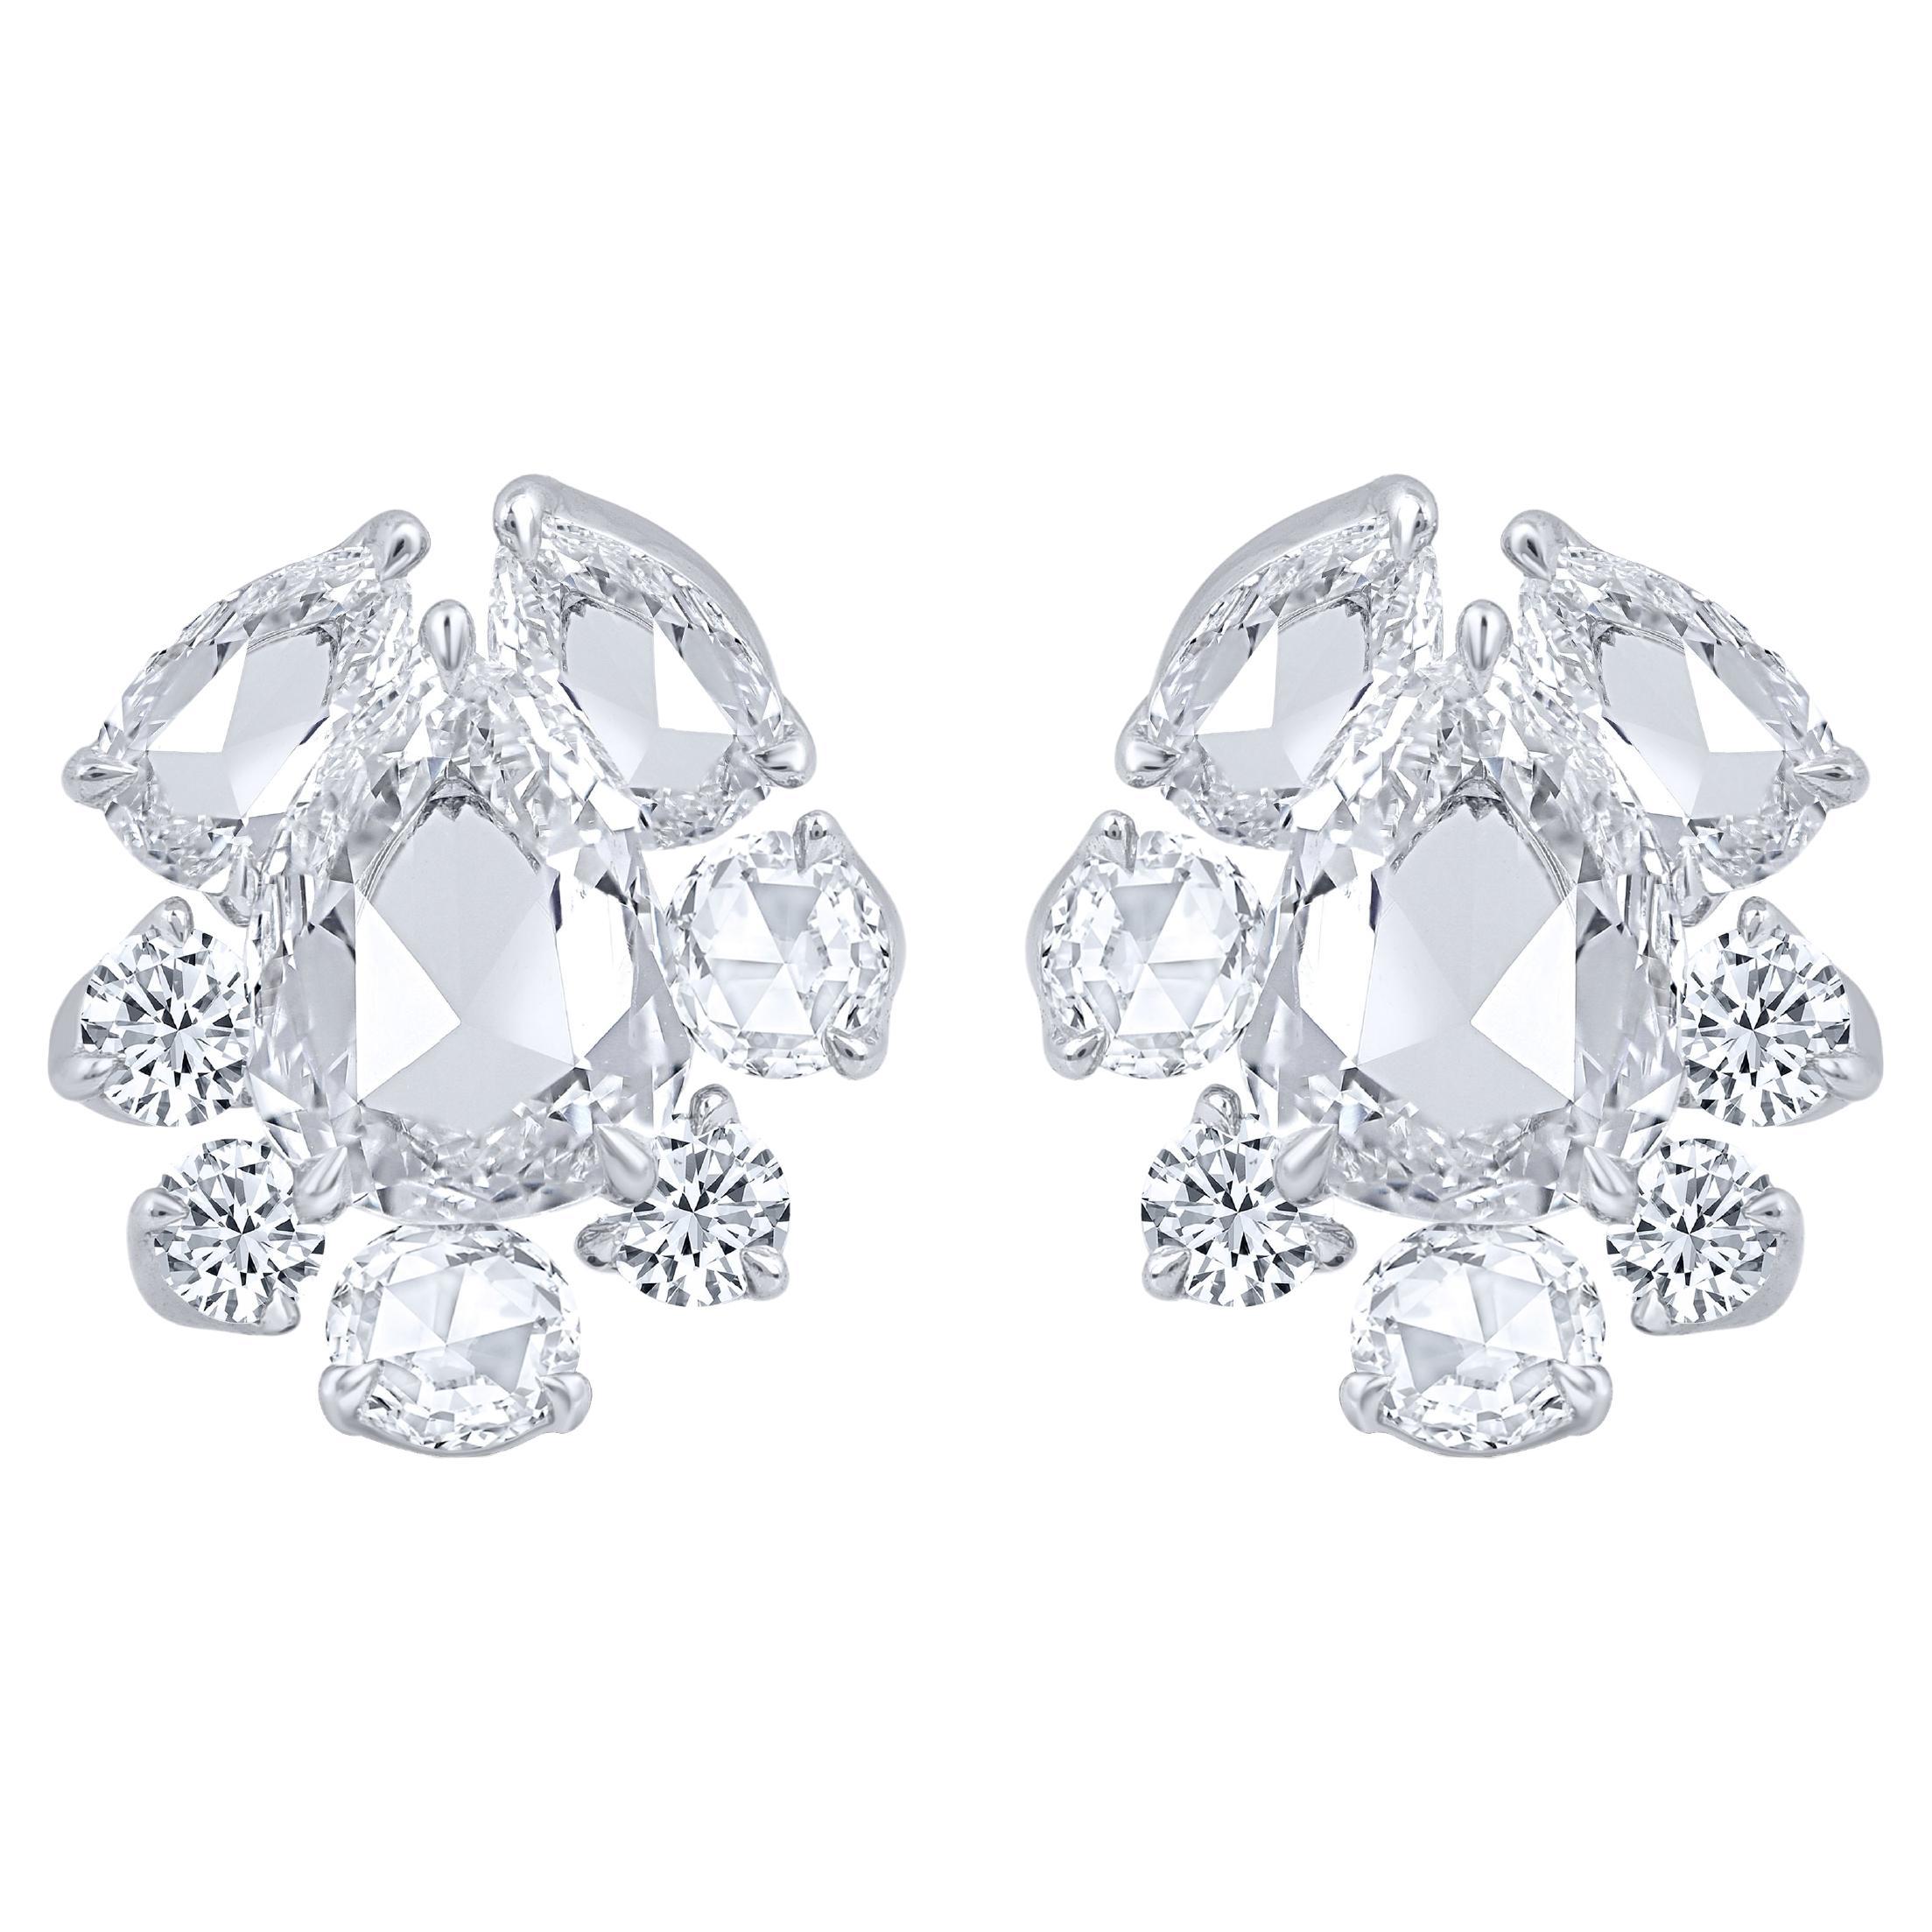 Harakh Colorless Diamond 1.25 Carat Stud Earrings in 18 Kt White Gold